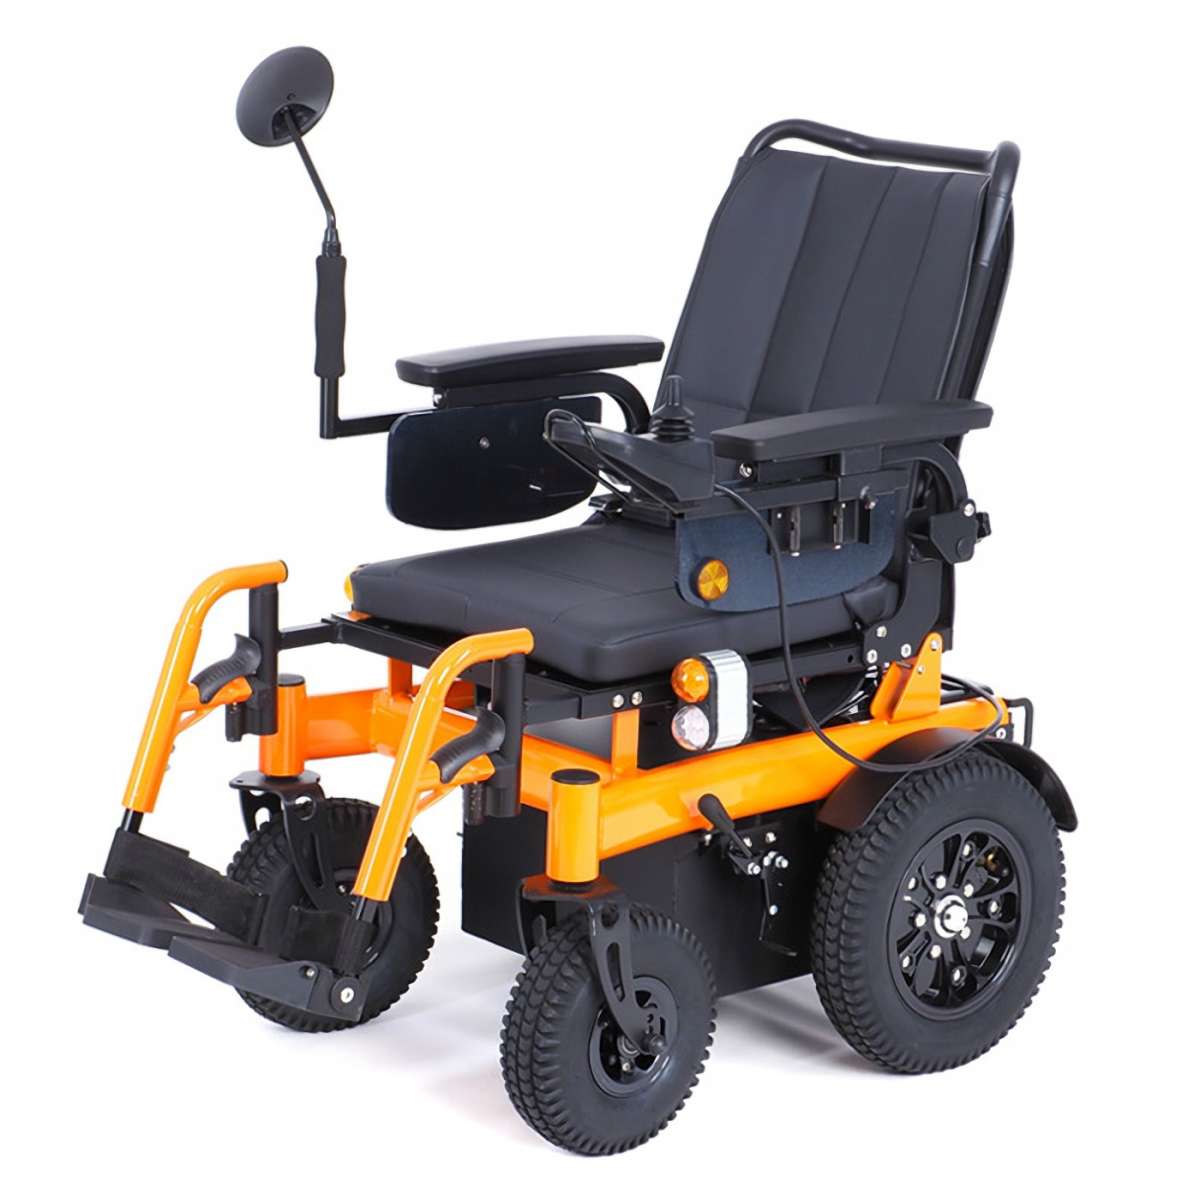 Advent super Chair MT-c21 (met Adventure) кресло-коляска